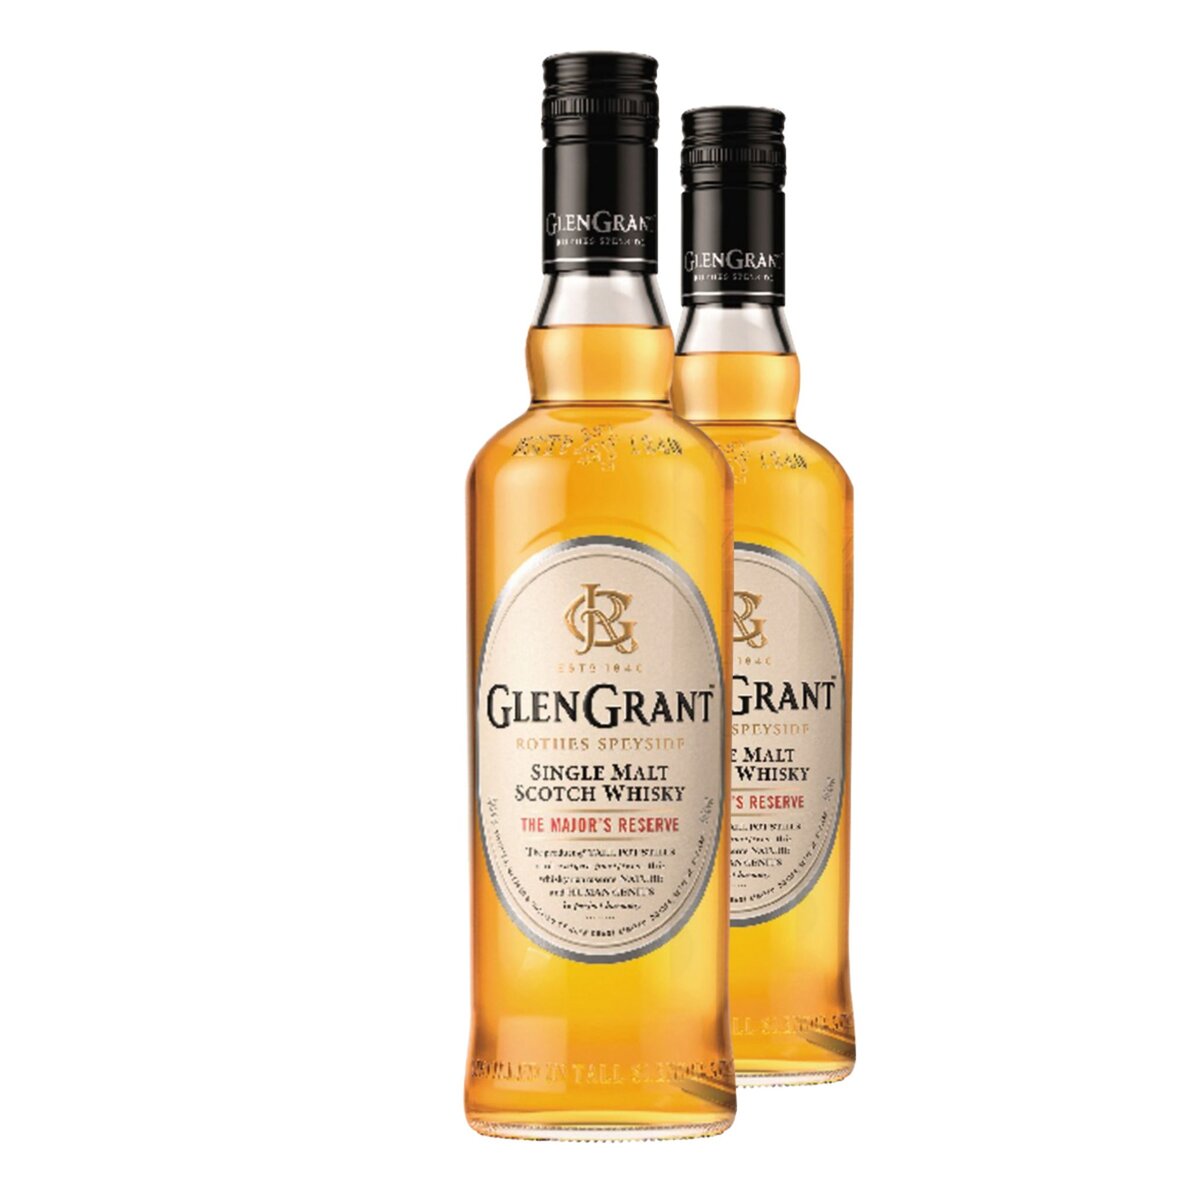 GlenGrant Lot de 2 bouteilles de Whisky Glen Grant The Major's Reserve